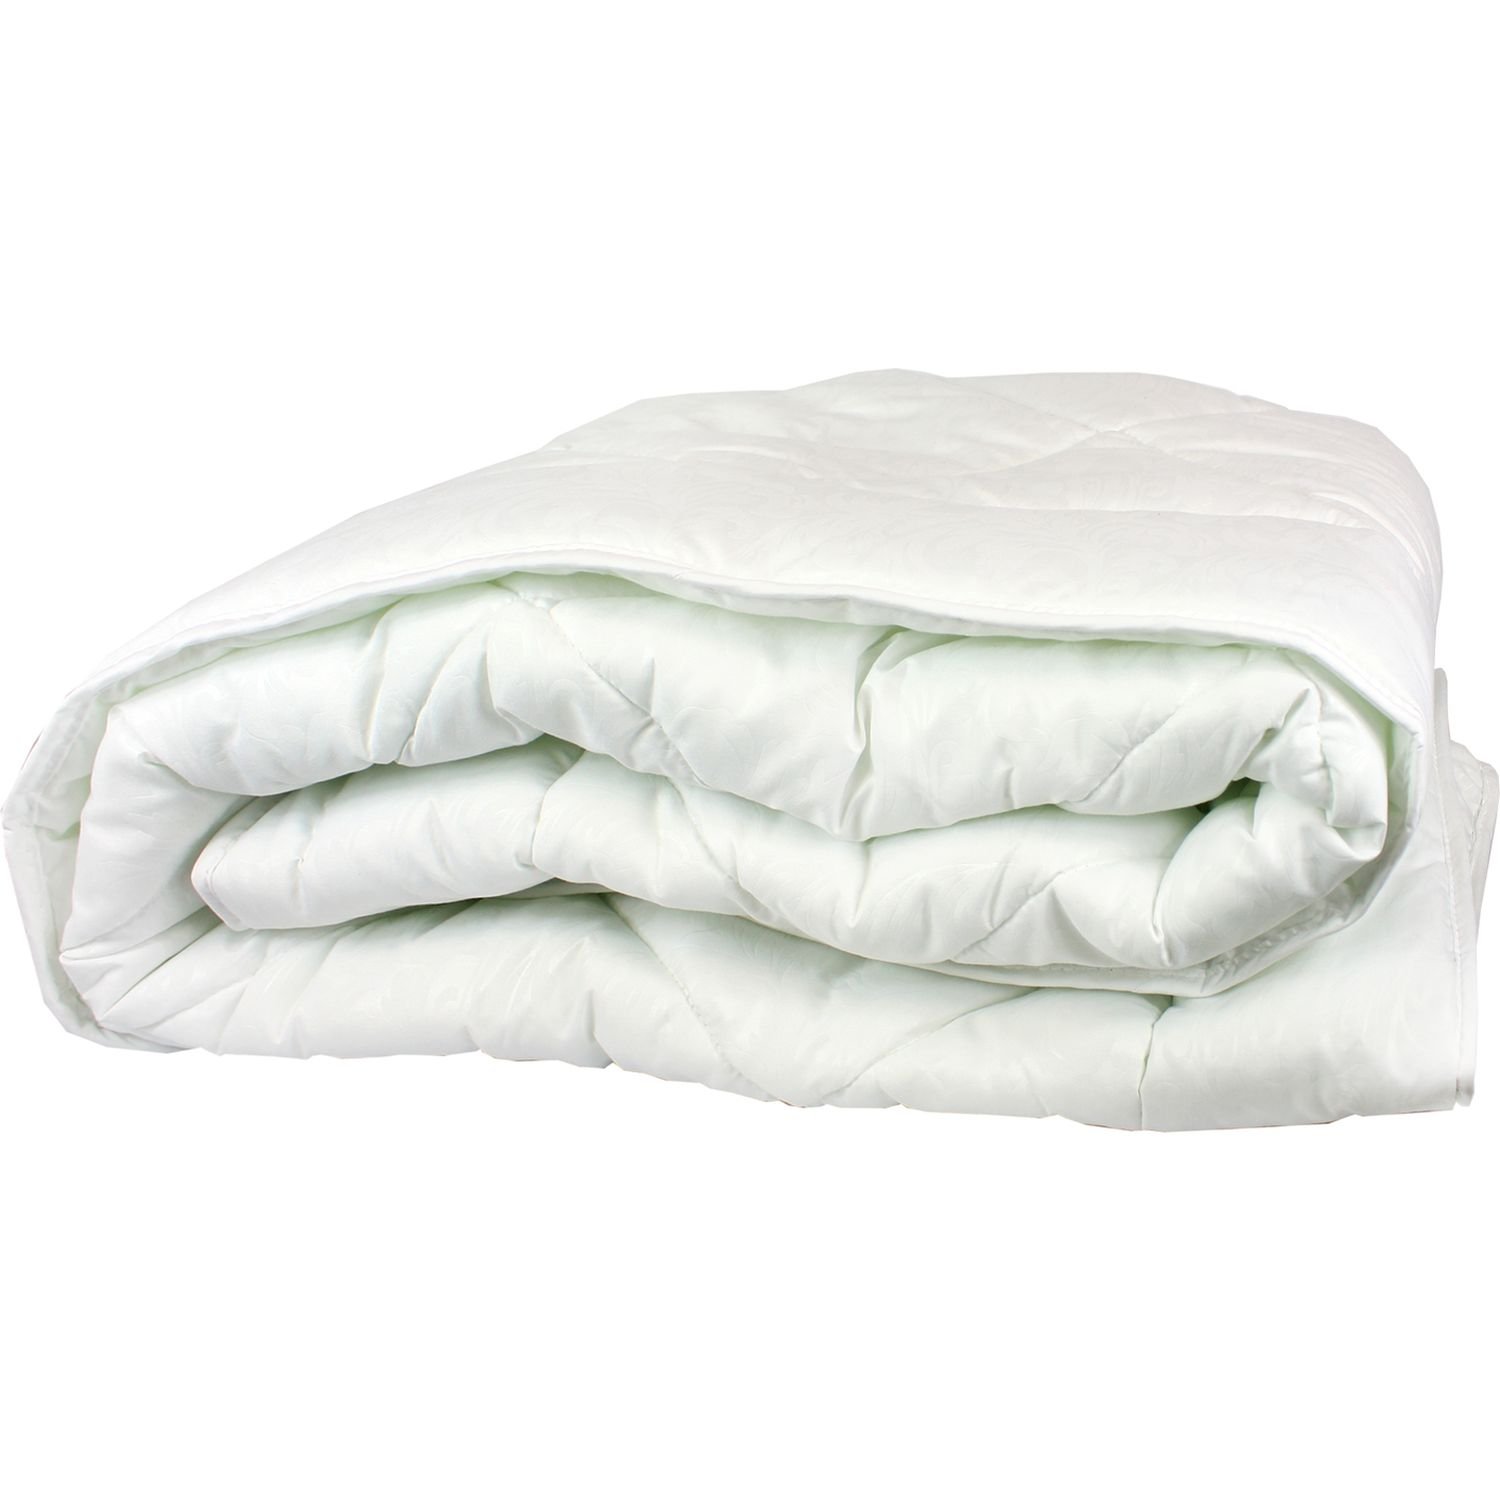 Одеяло LightHouse Soft Line white, 210х140 см, белое (38338) - фото 3